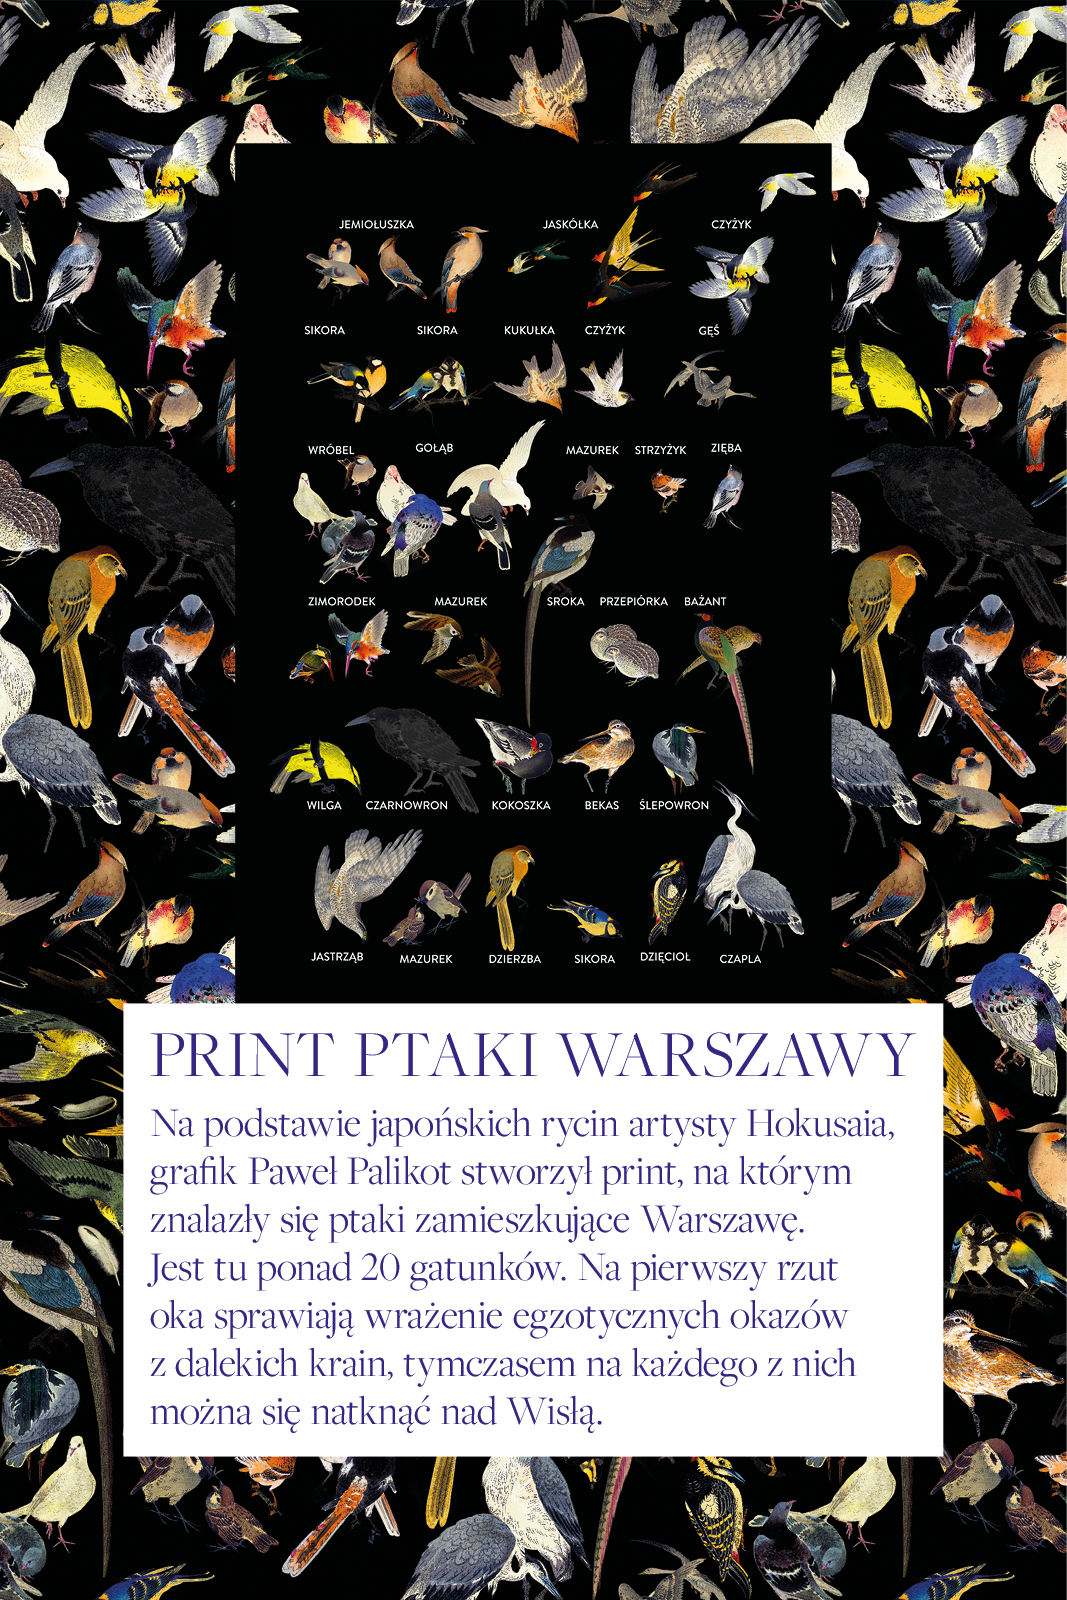 SWEET DREAMS birds of Warsaw print